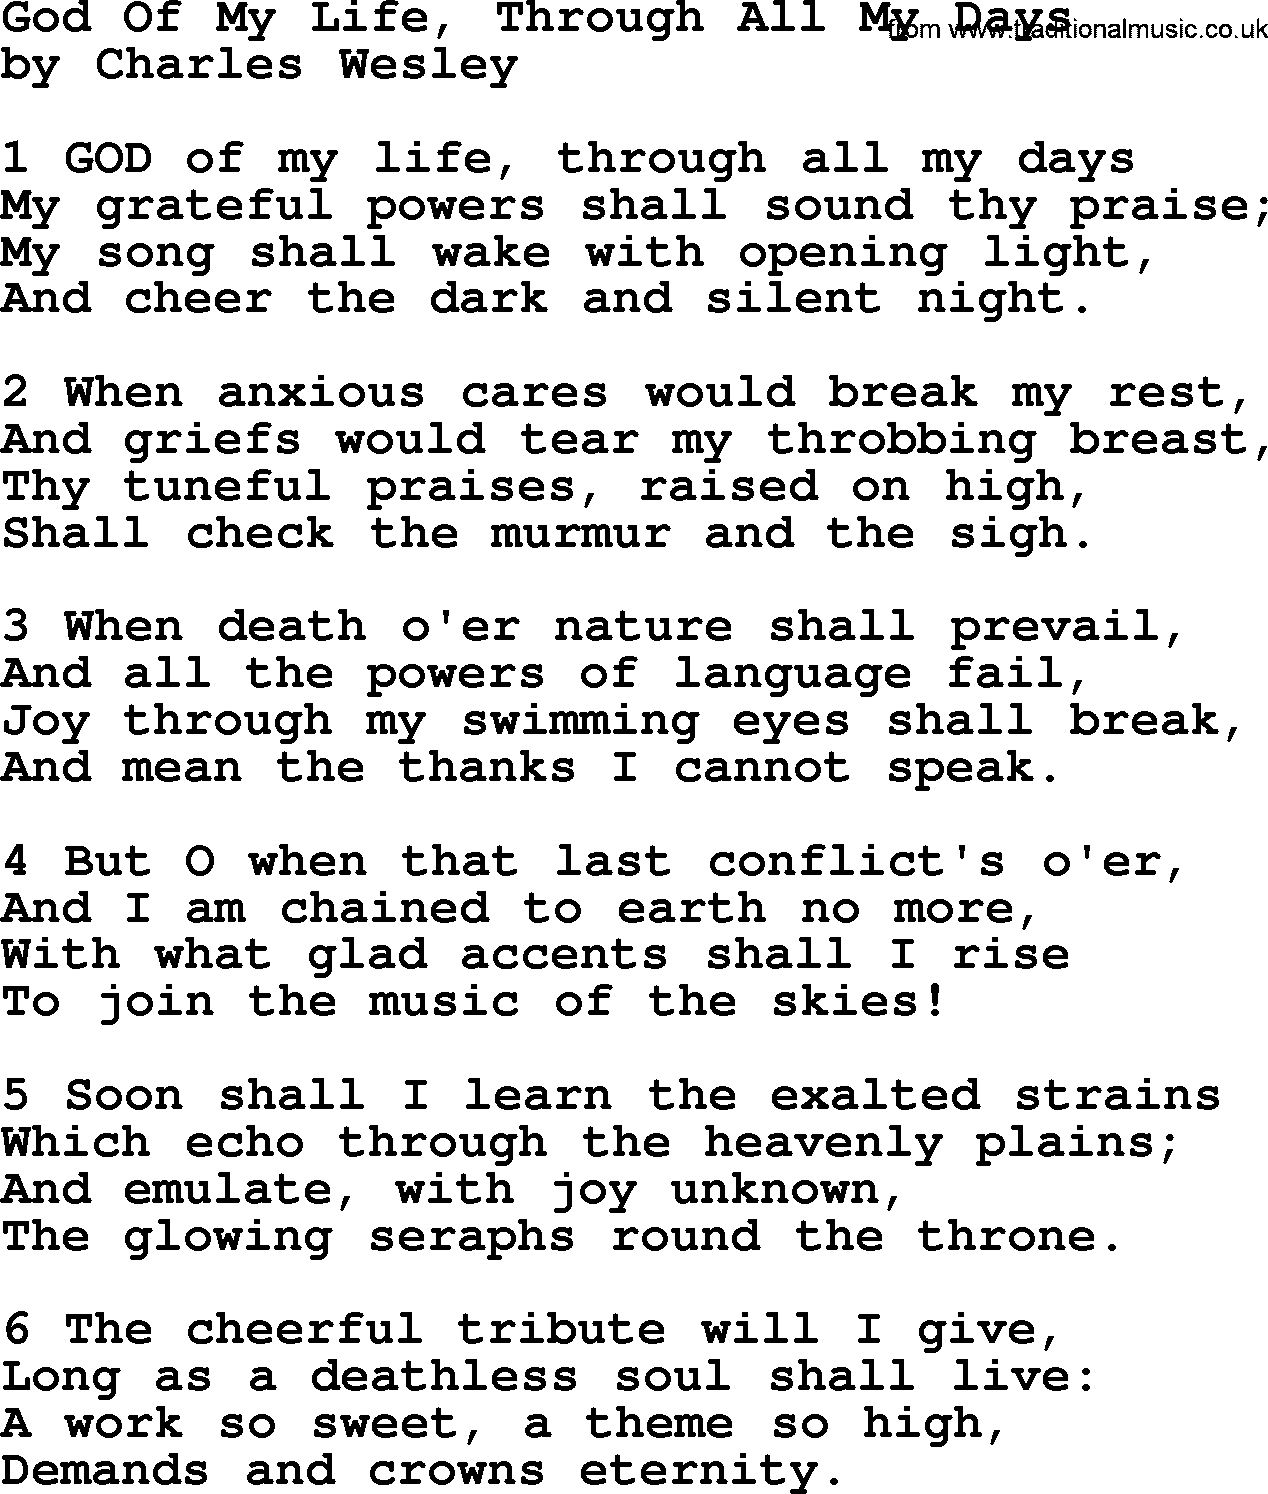 Charles Wesley hymn: God Of My Life, Through All My Days, lyrics